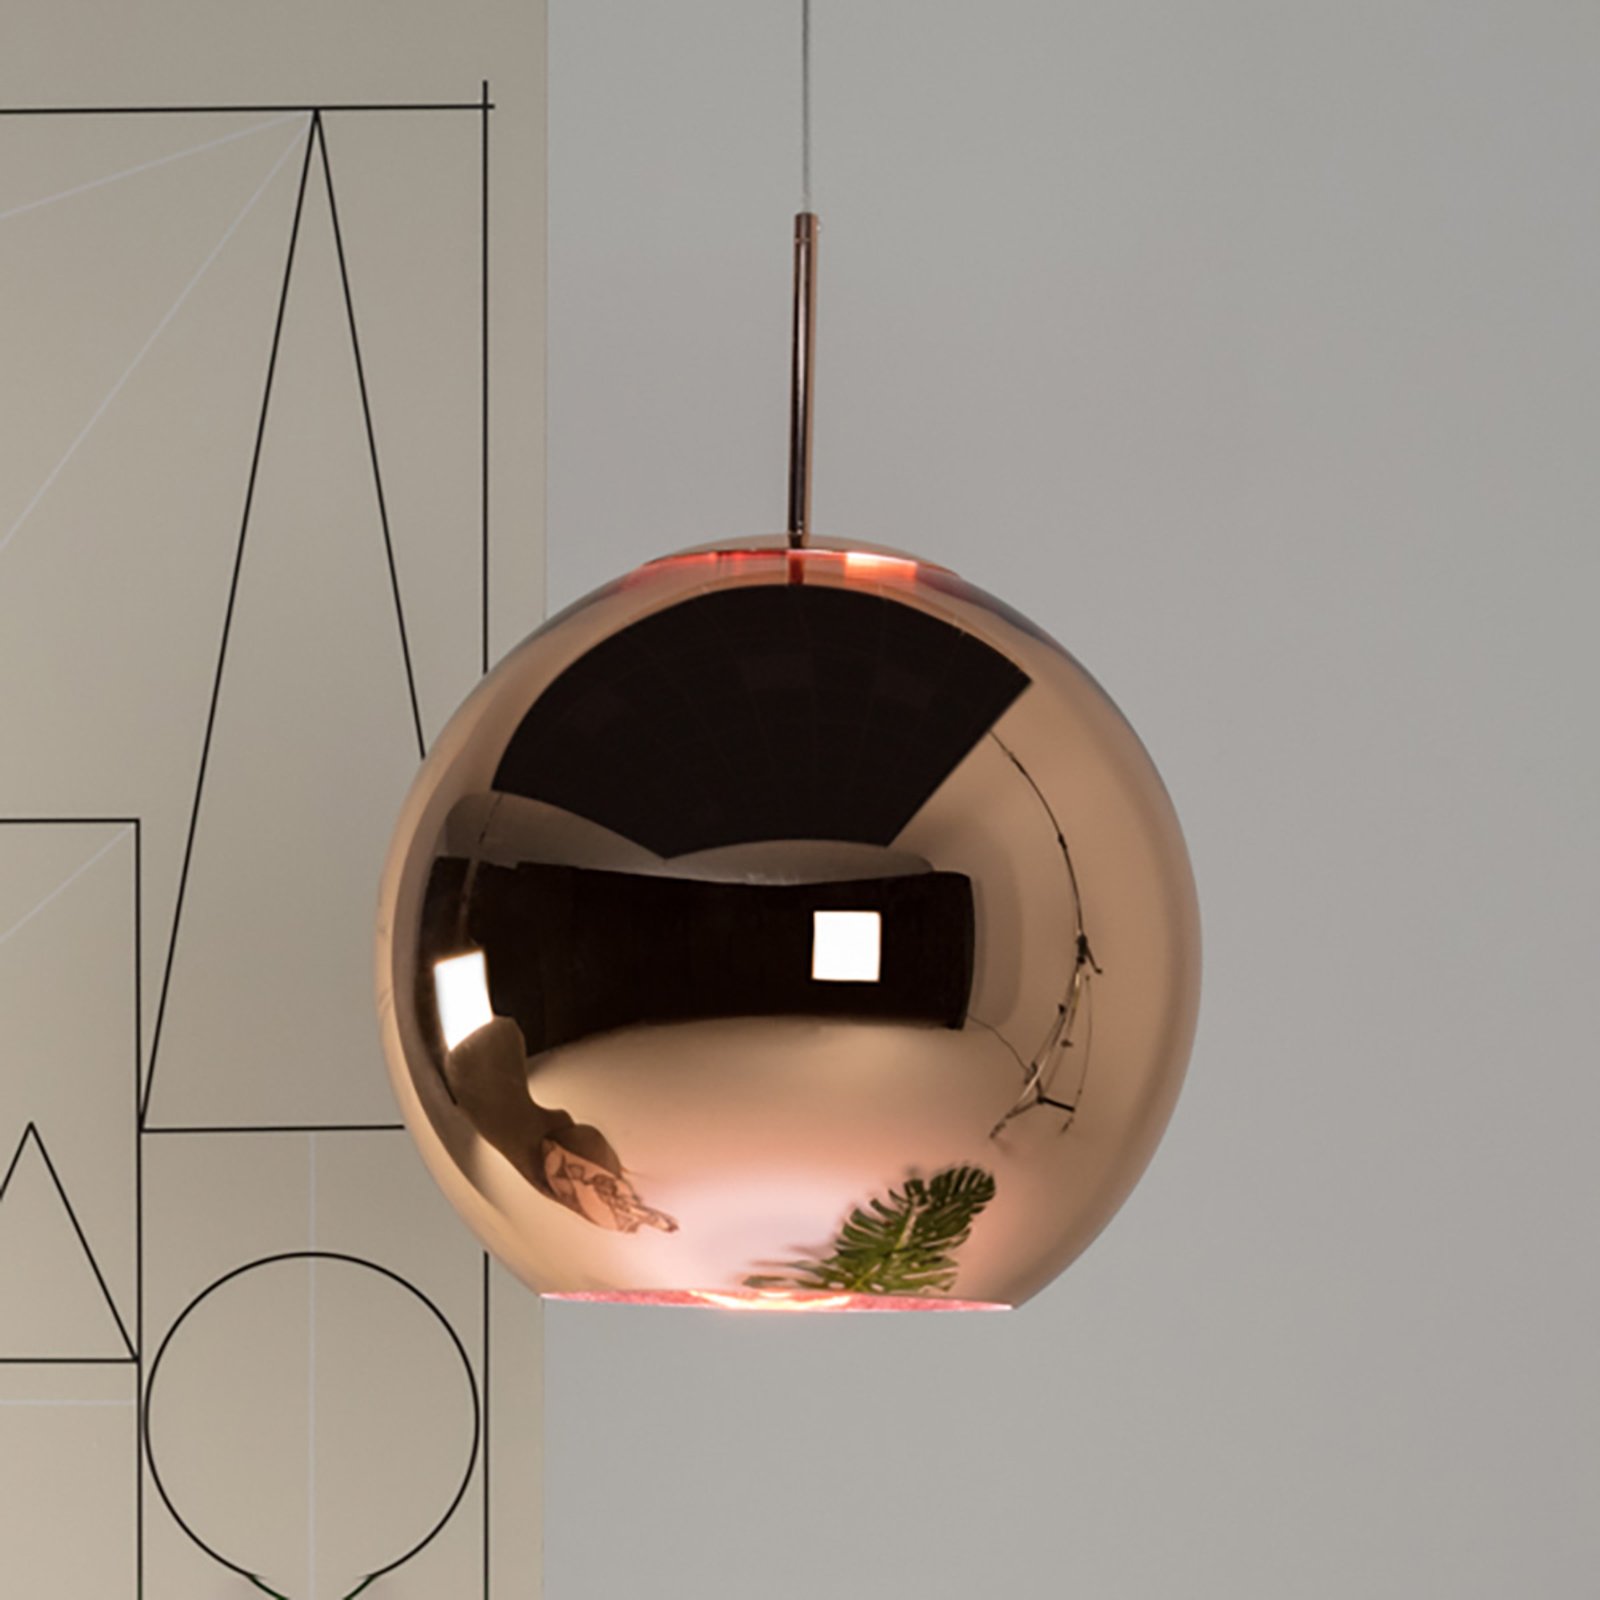 Tom Dixon Copper Round hanglamp Ø 45 cm koper